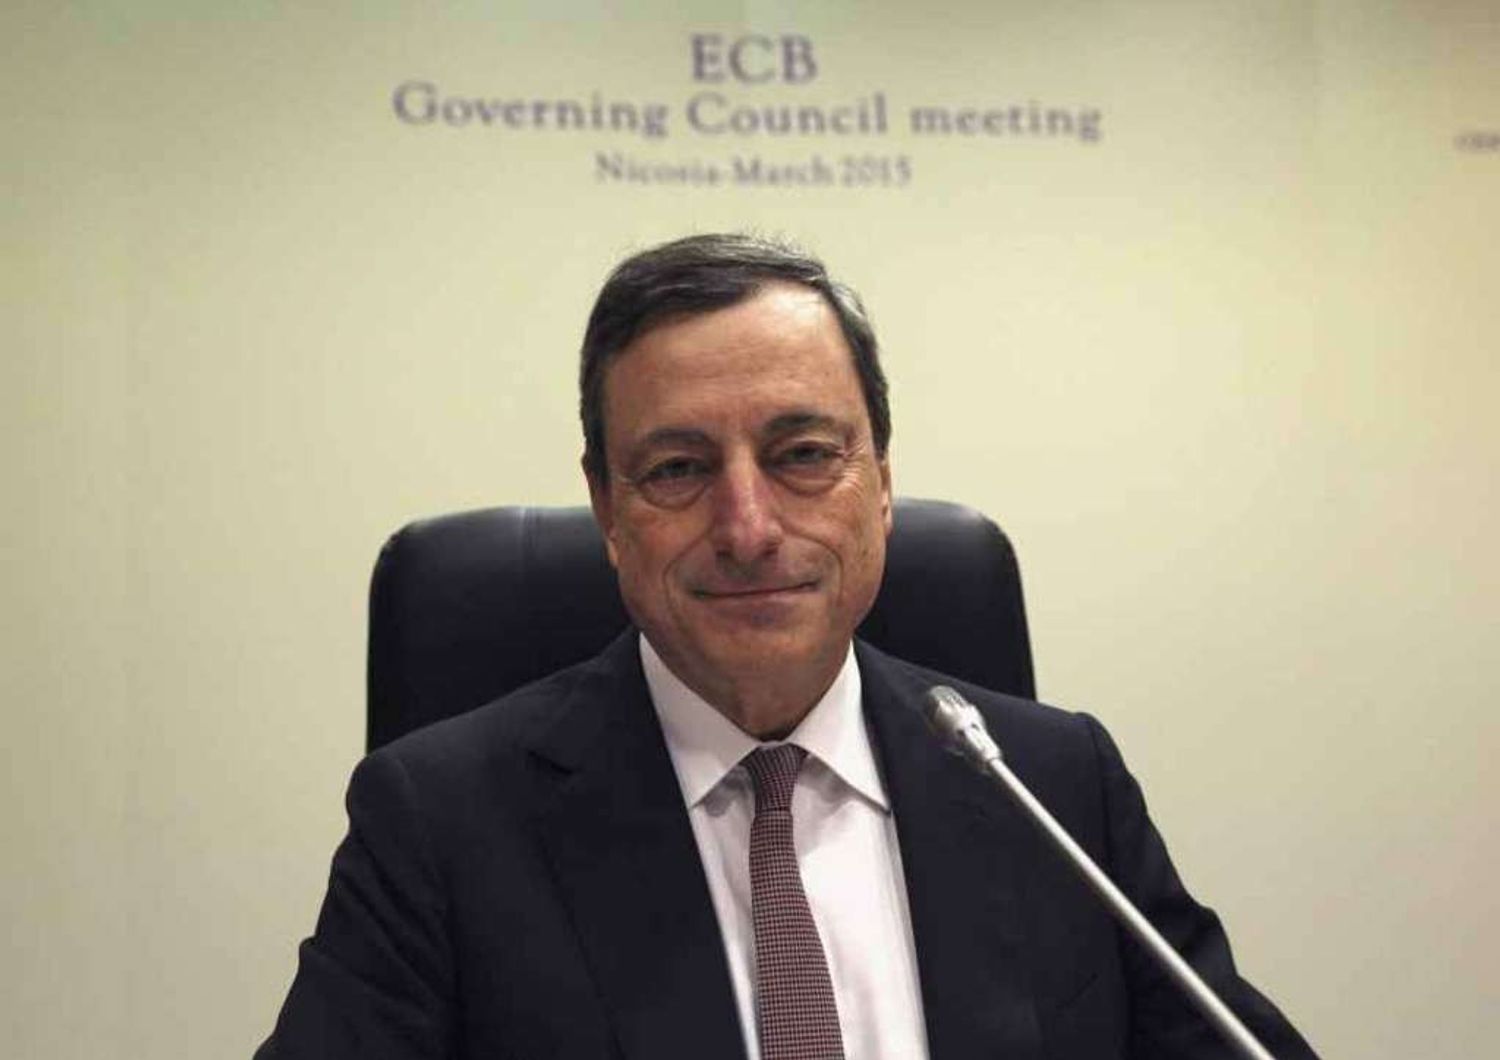 Markets driven down by ECB QE announcement